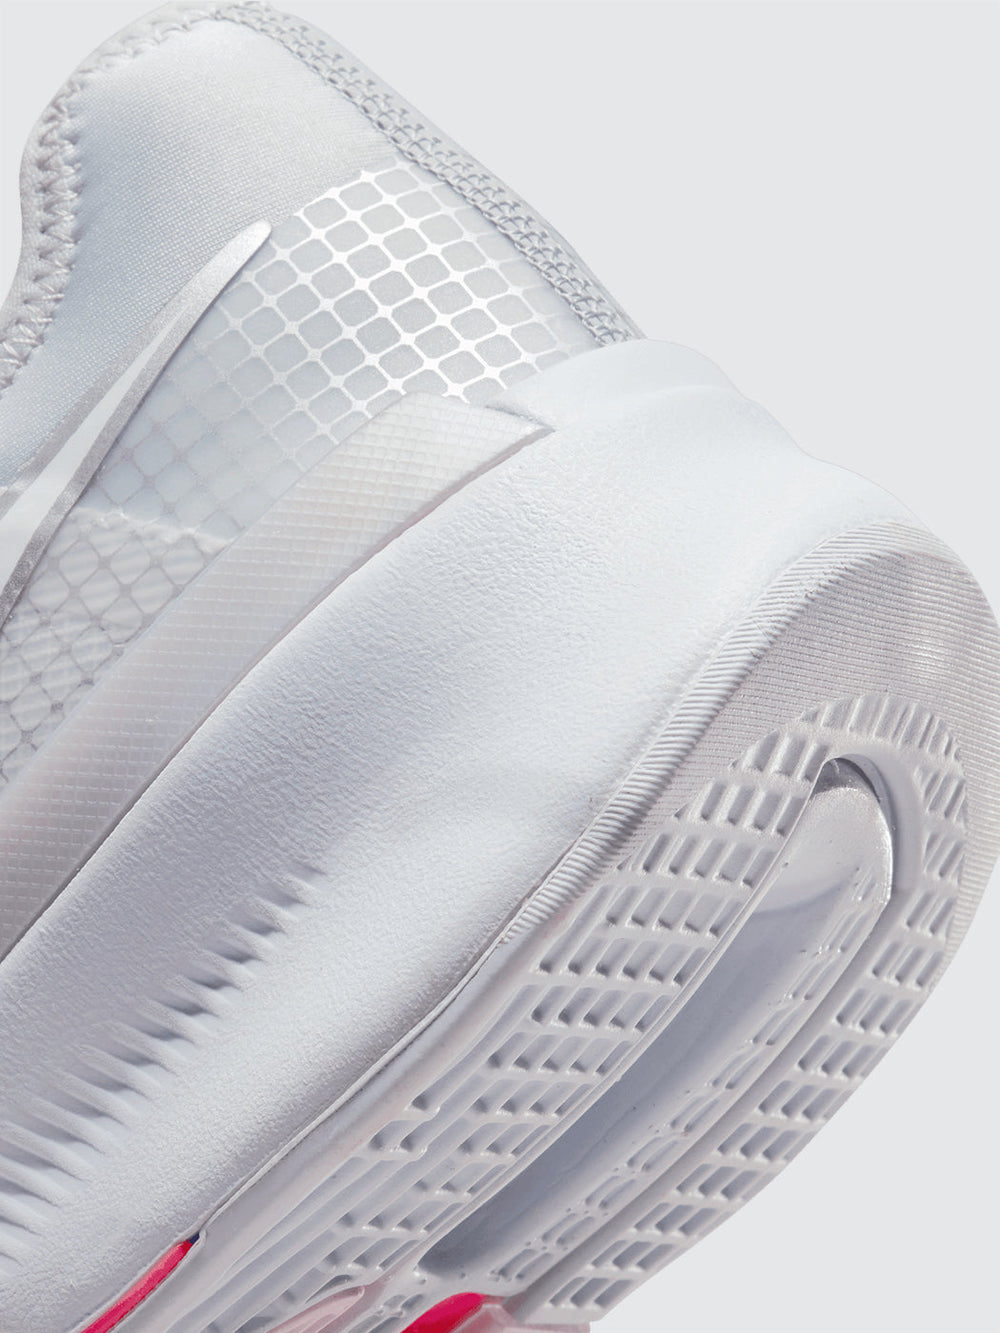 Nike Air Zoom Superrep 3 - Pure Platinum Metallic Silver Cool Grey